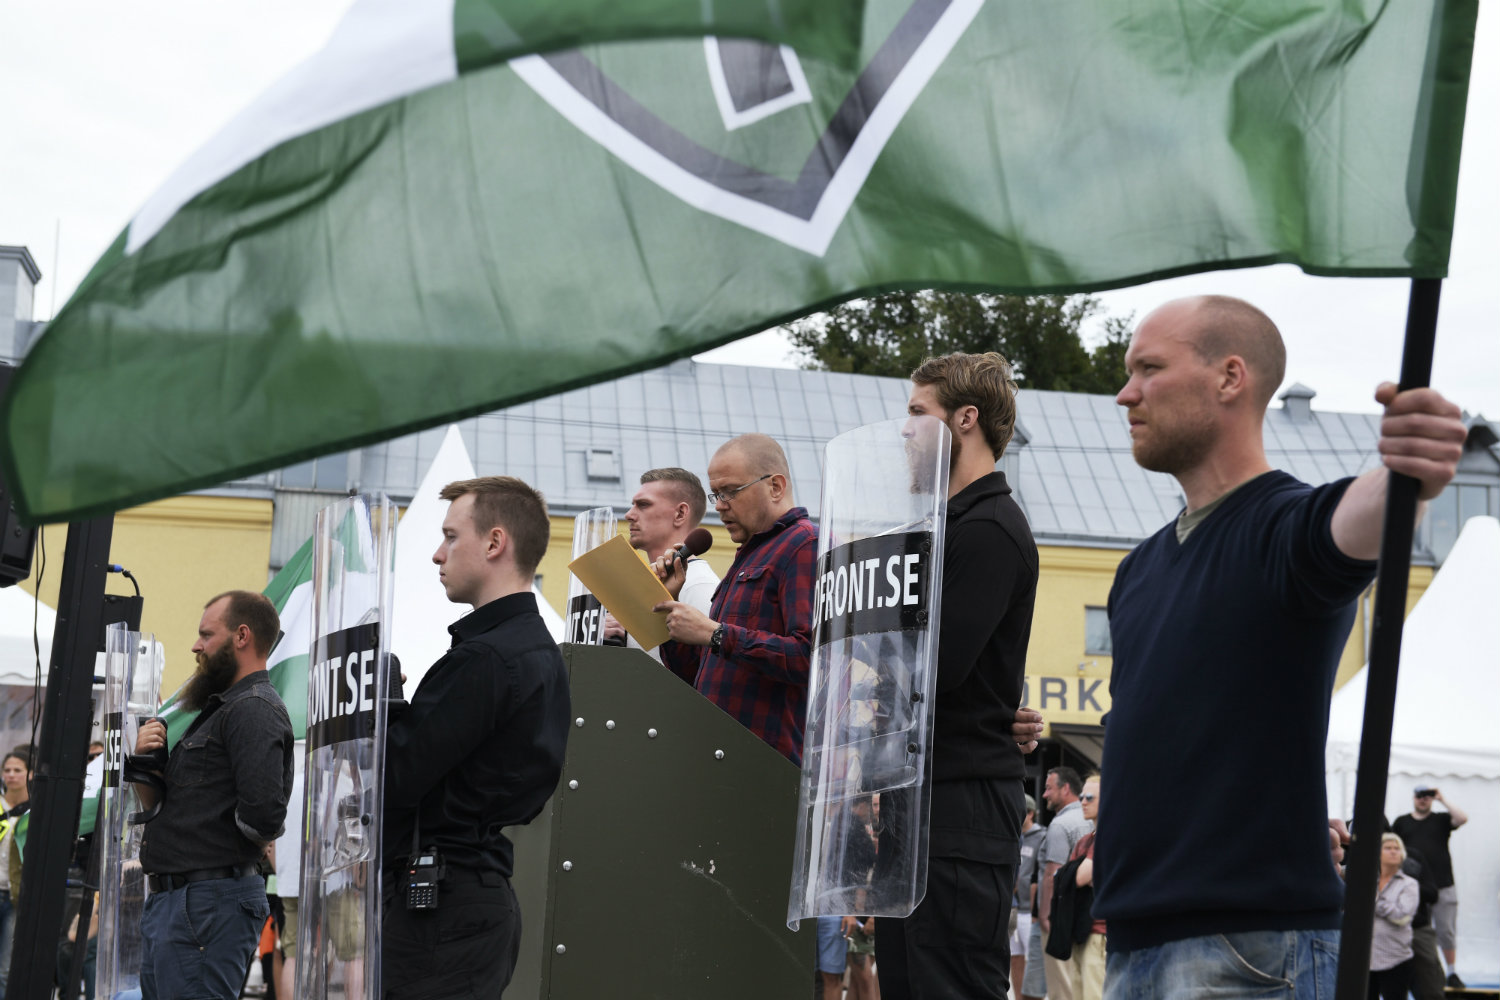 Sweden’s Nordic Resistance Movement demonstrates